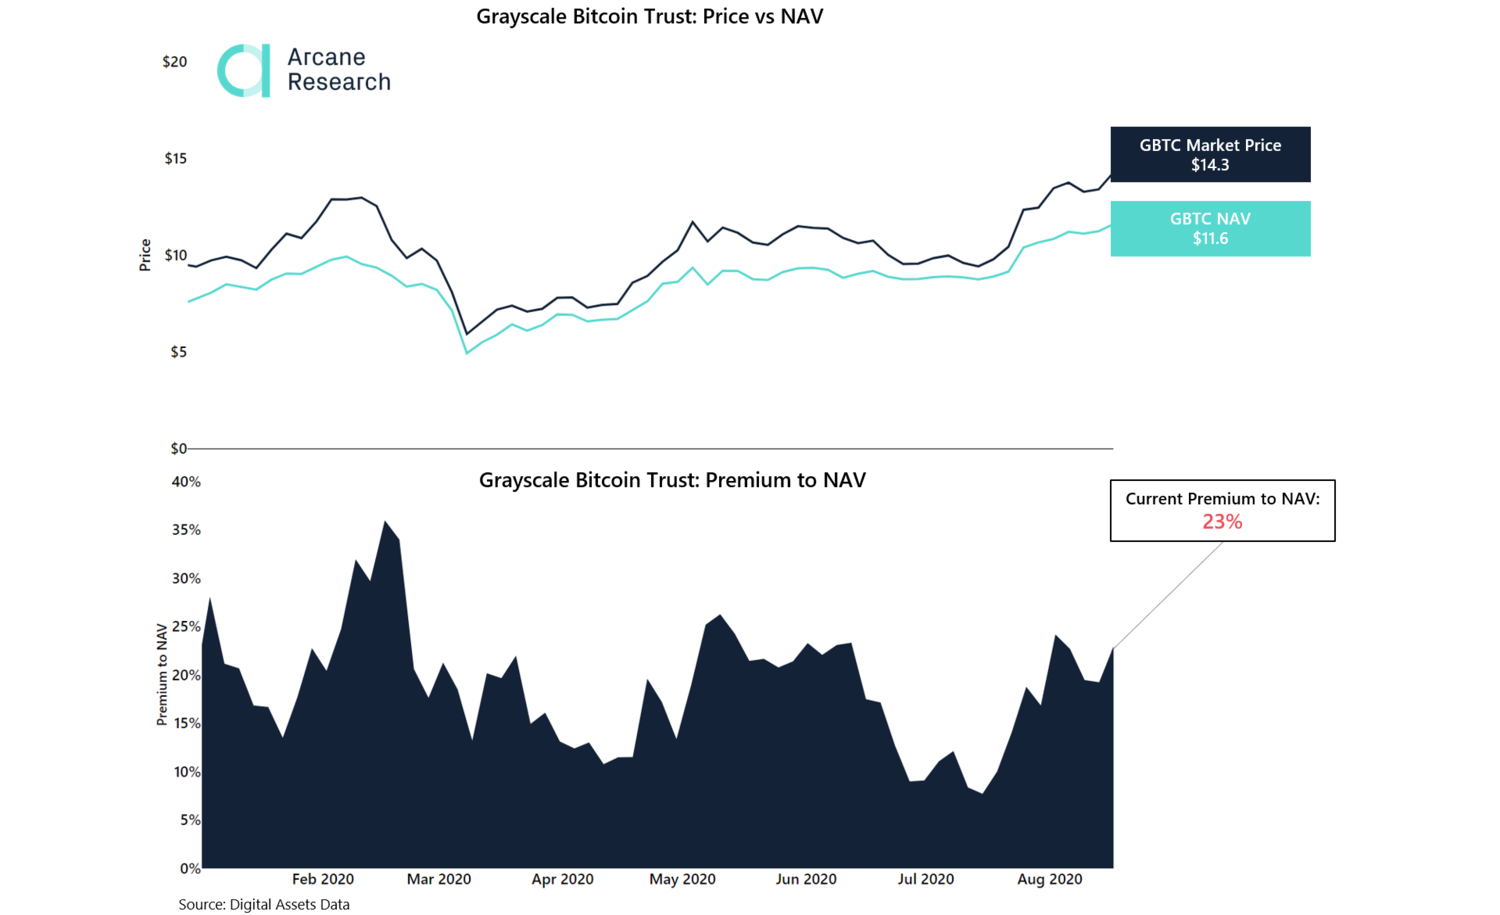 The Grayscale Bitcoin Trust